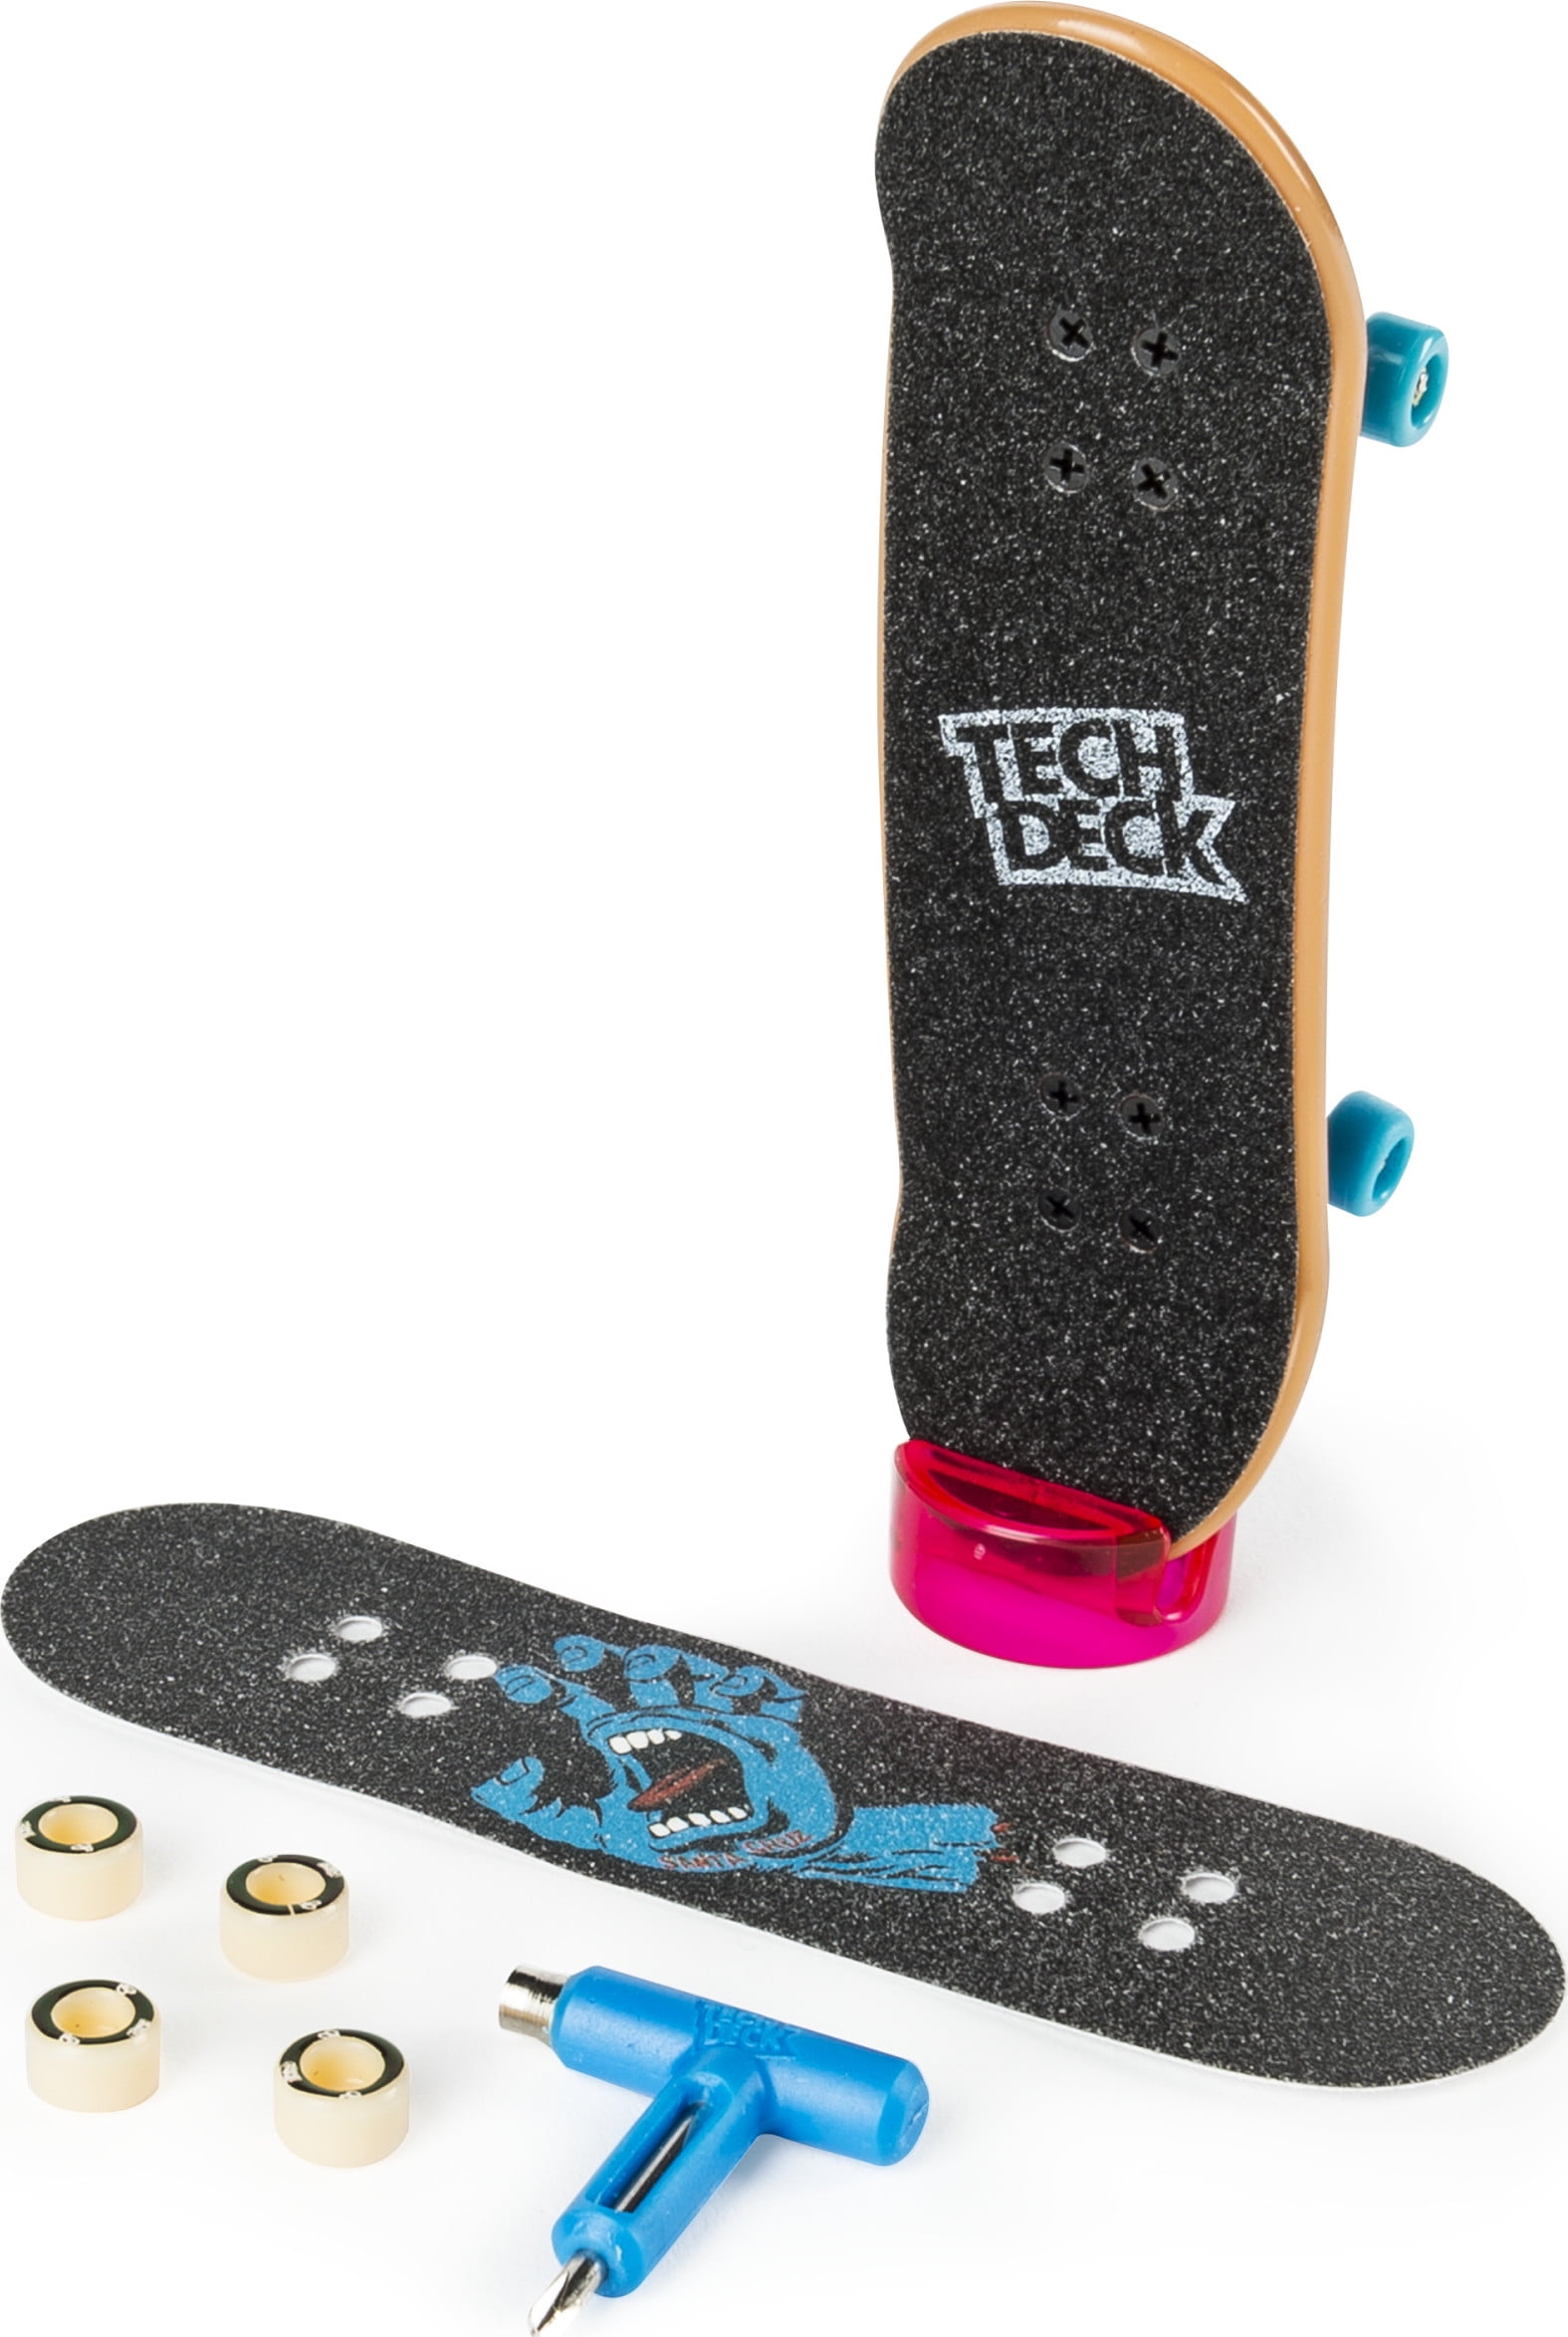 Tech Deck 2011 Plan B 4 Pack 96 mm Fingerboards Skateboards NEW IN PACKAGE 